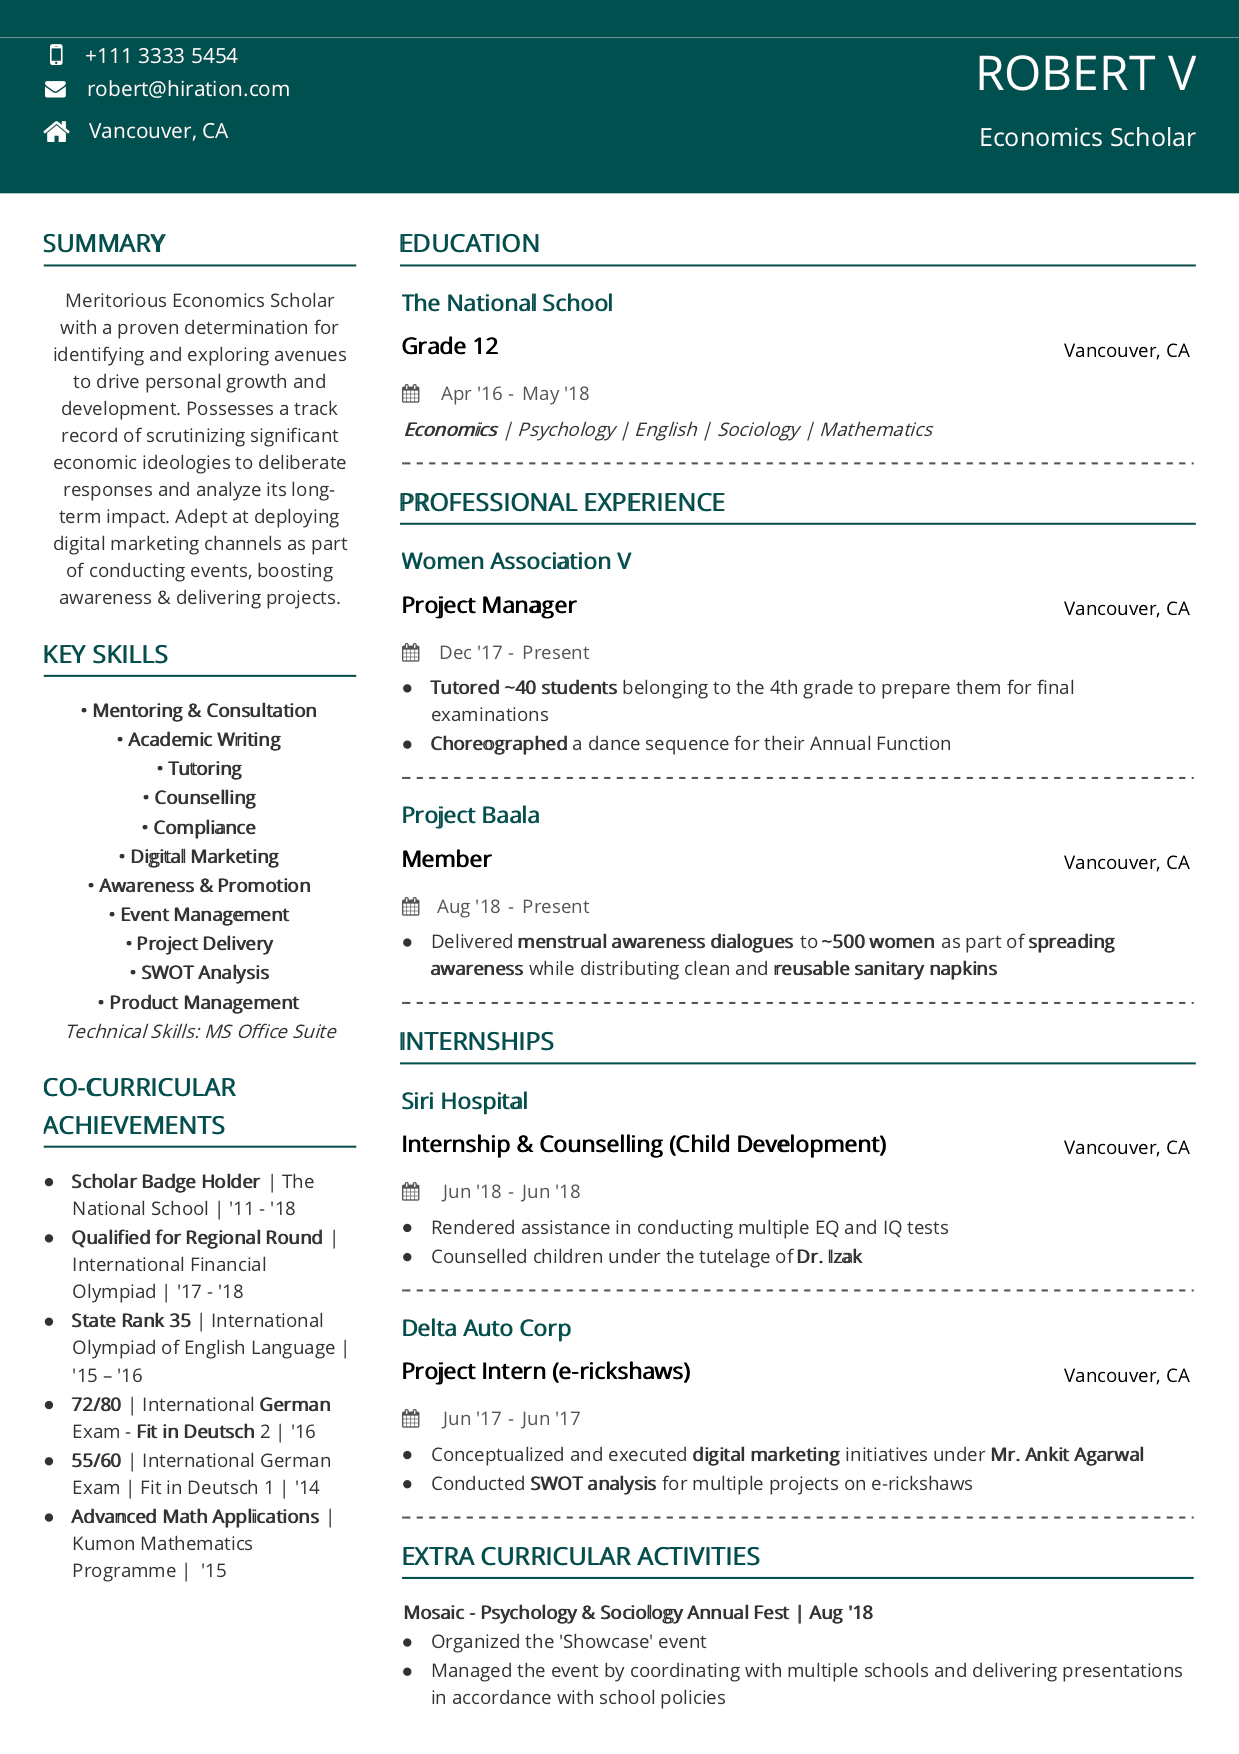 How To Write Resume First Resume 1 how to write resume|wikiresume.com